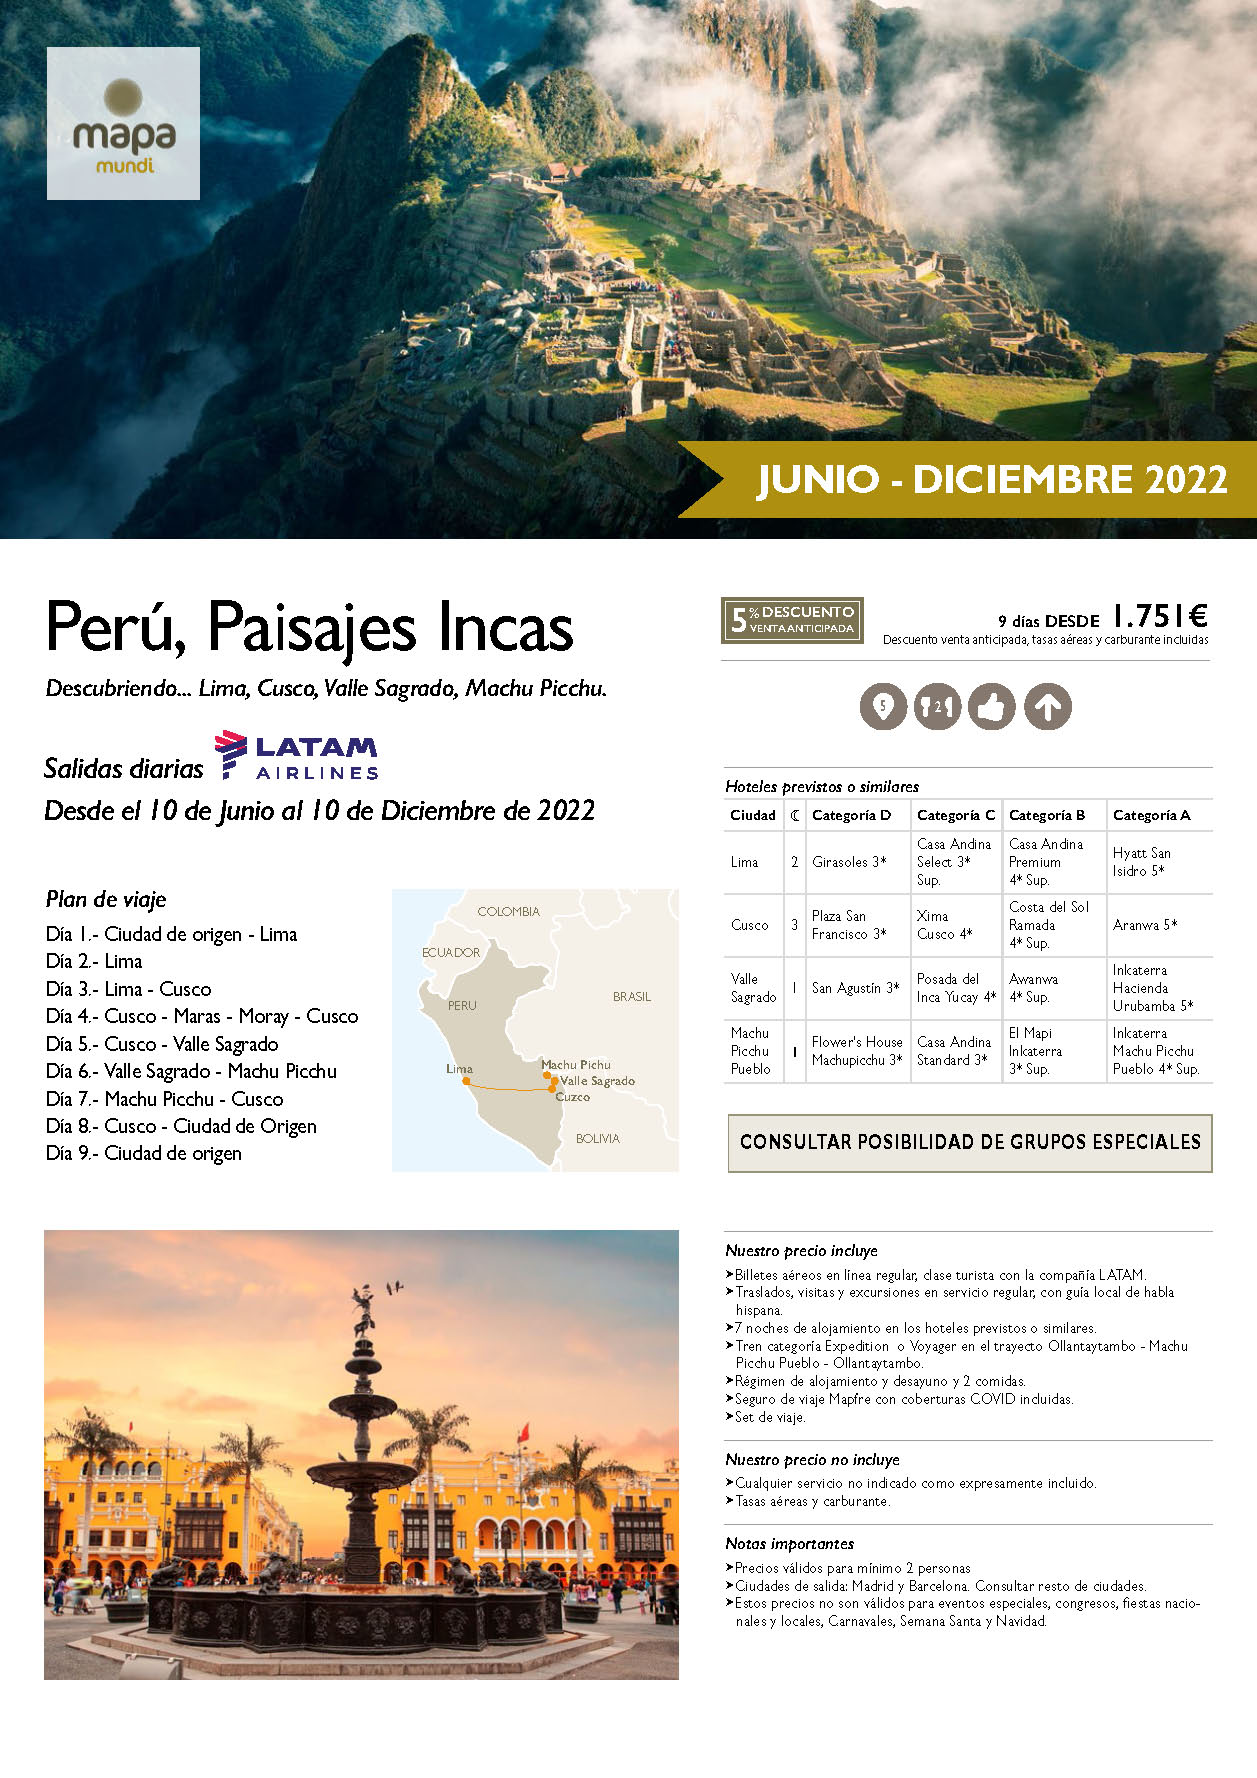 Oferta Mapa Mundi Circuito Peru Paisajes Incas 9 dias salidas Junio a Diciembre 2022 desde Madrid y Barcelona vuelos Latam